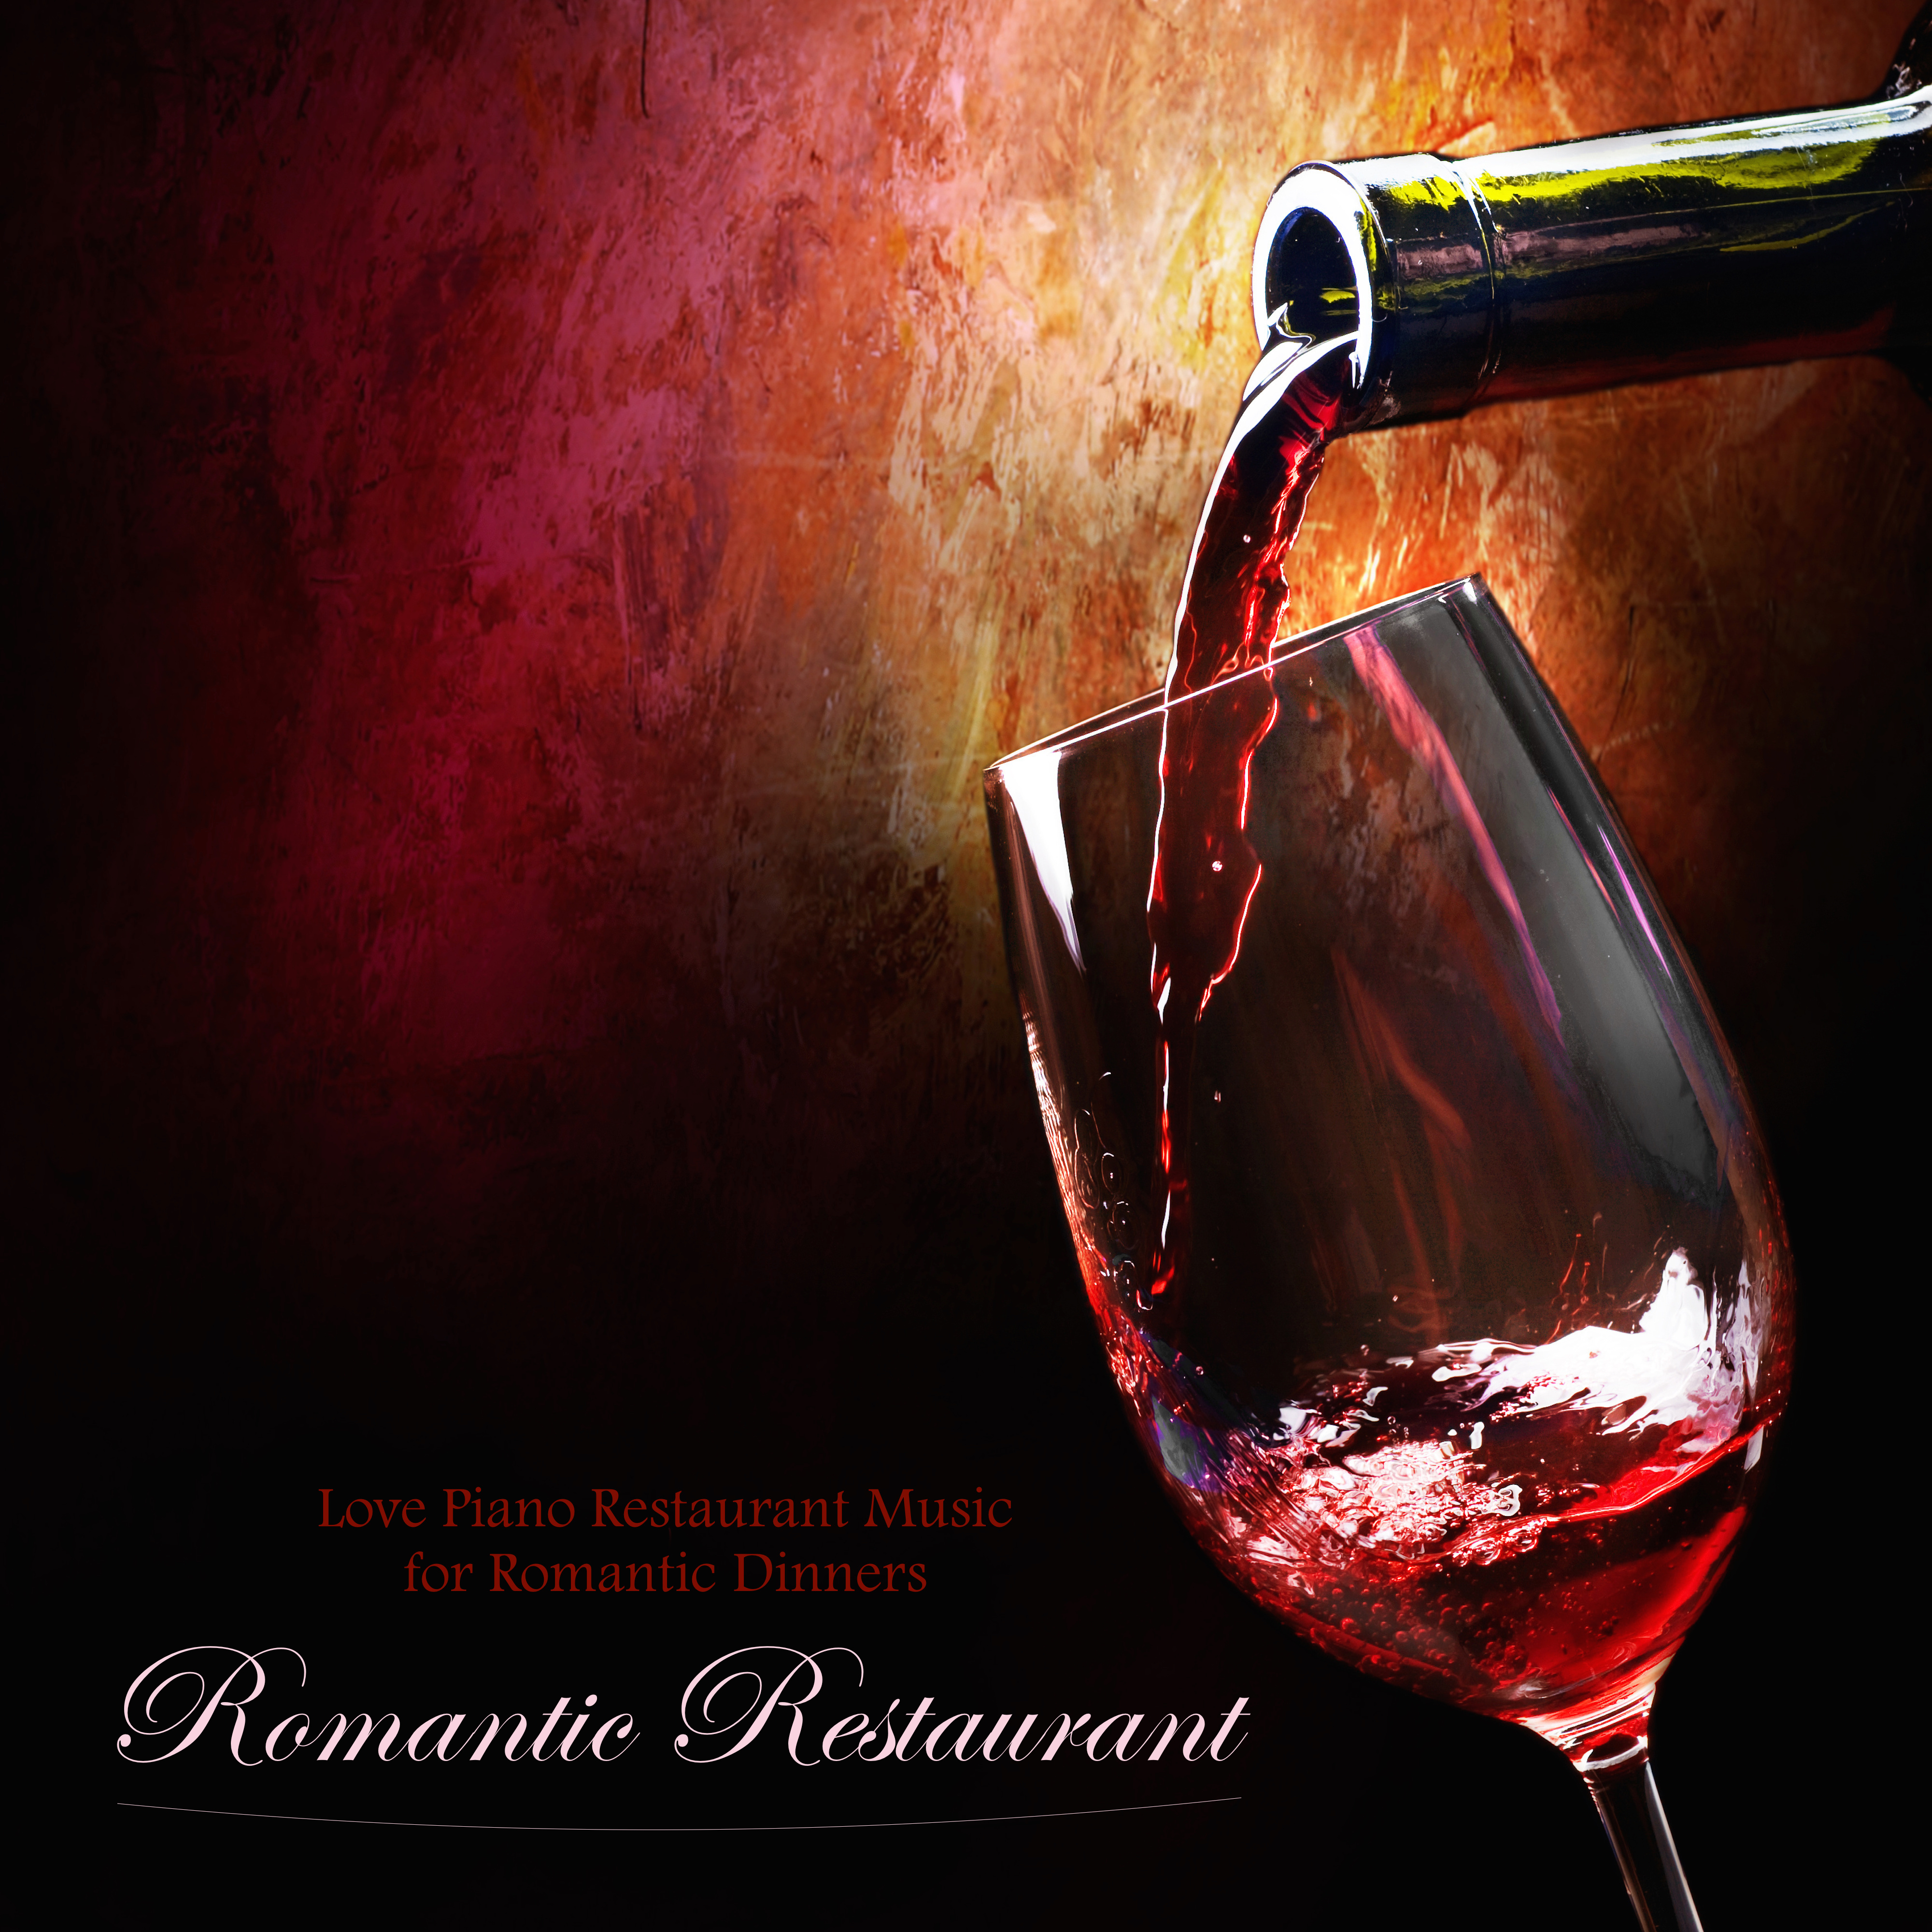 Romantic Restaurant - Love Piano Restaurant Music for Romantic Dinners